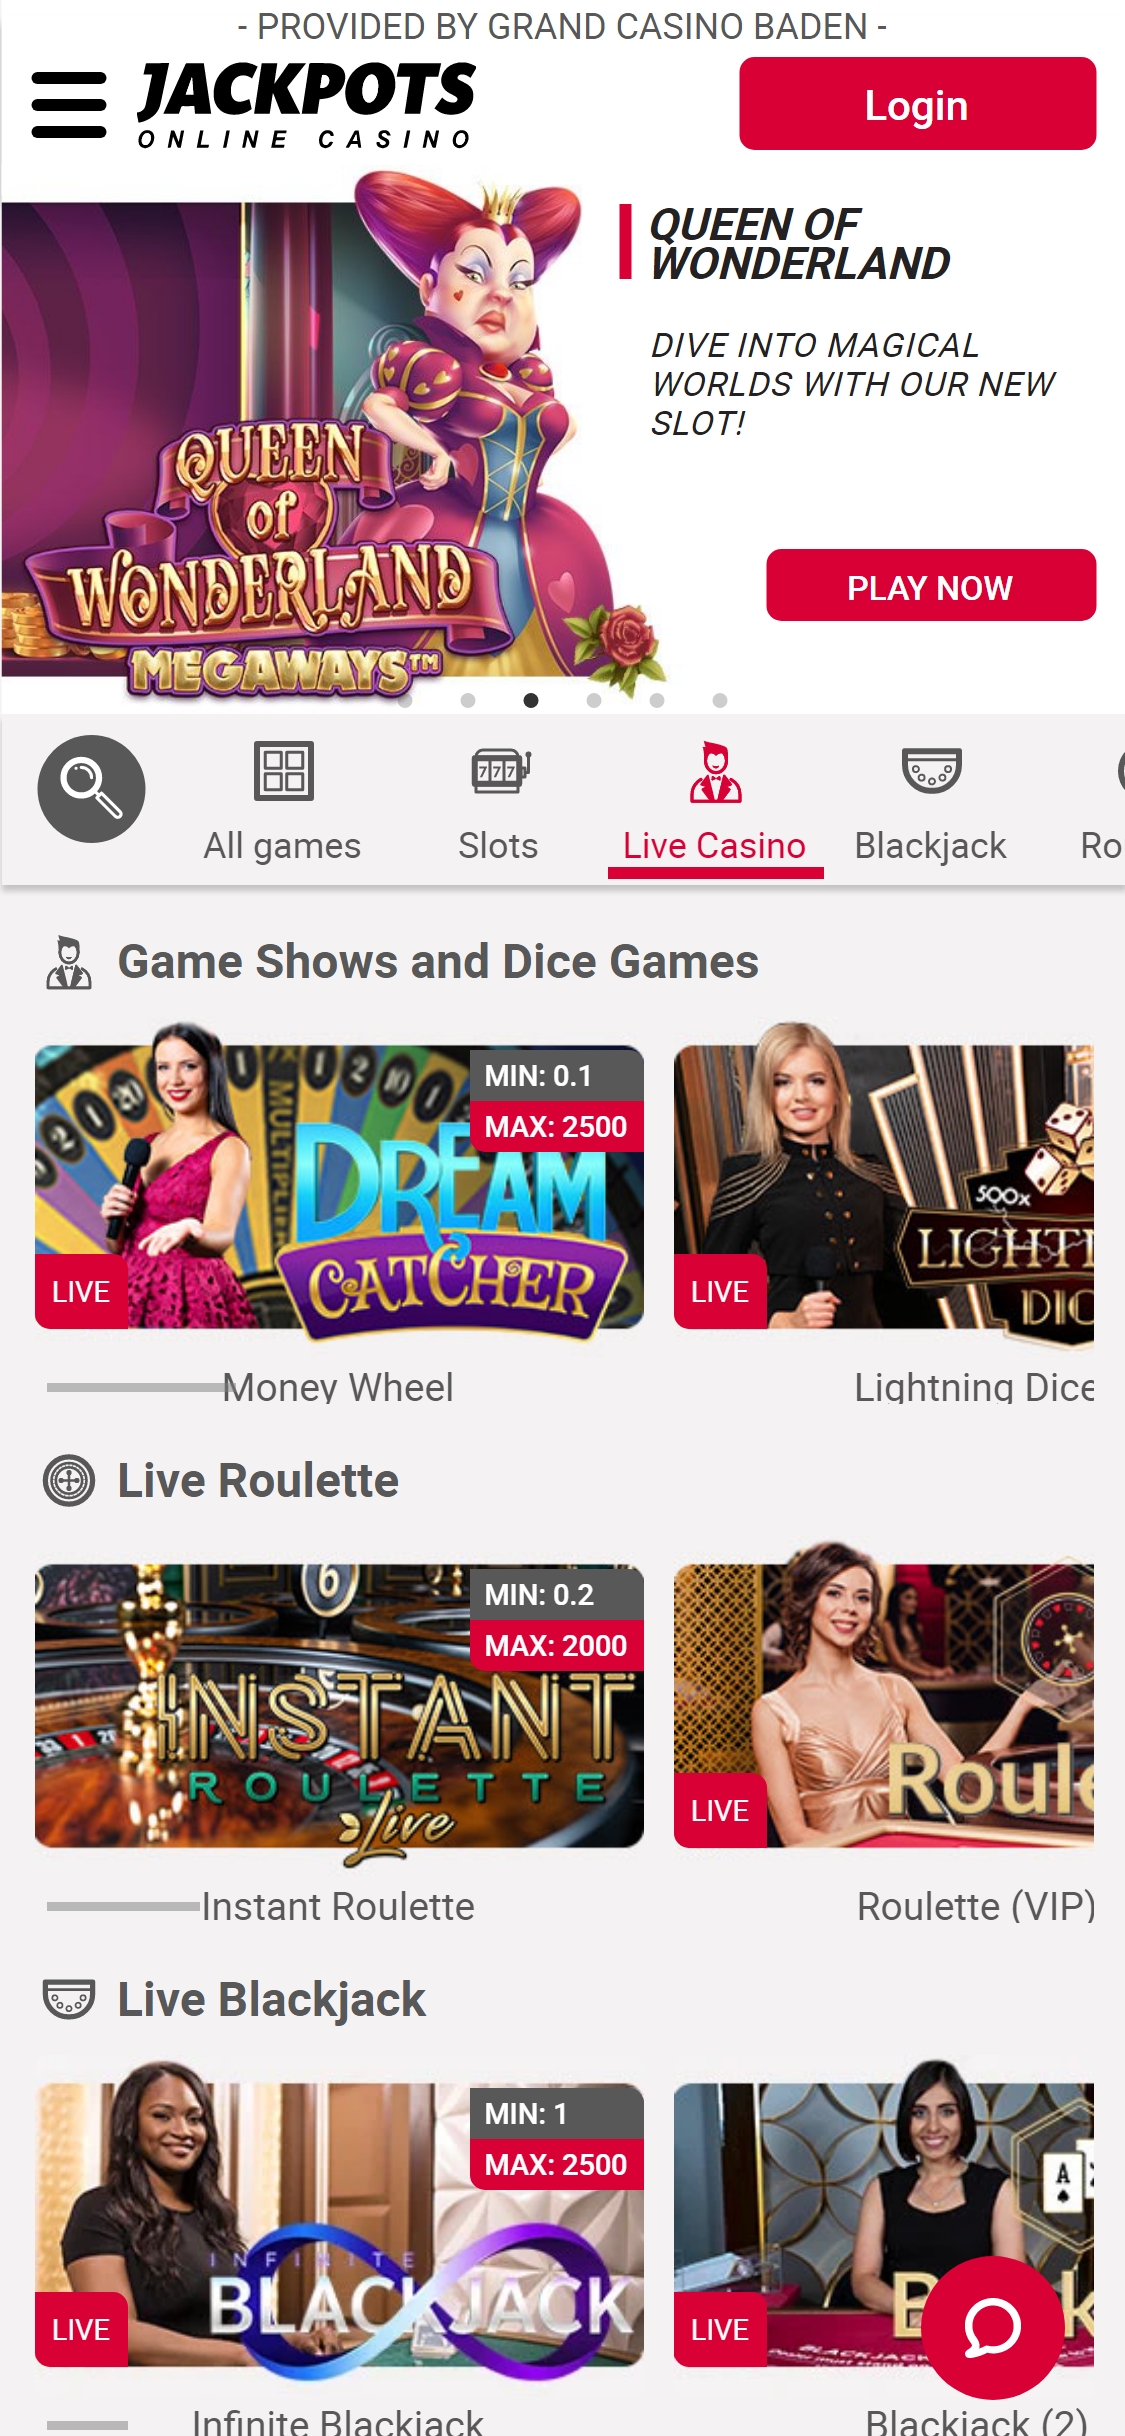 Jackpots CH Casino Mobile Live Dealer Games Review